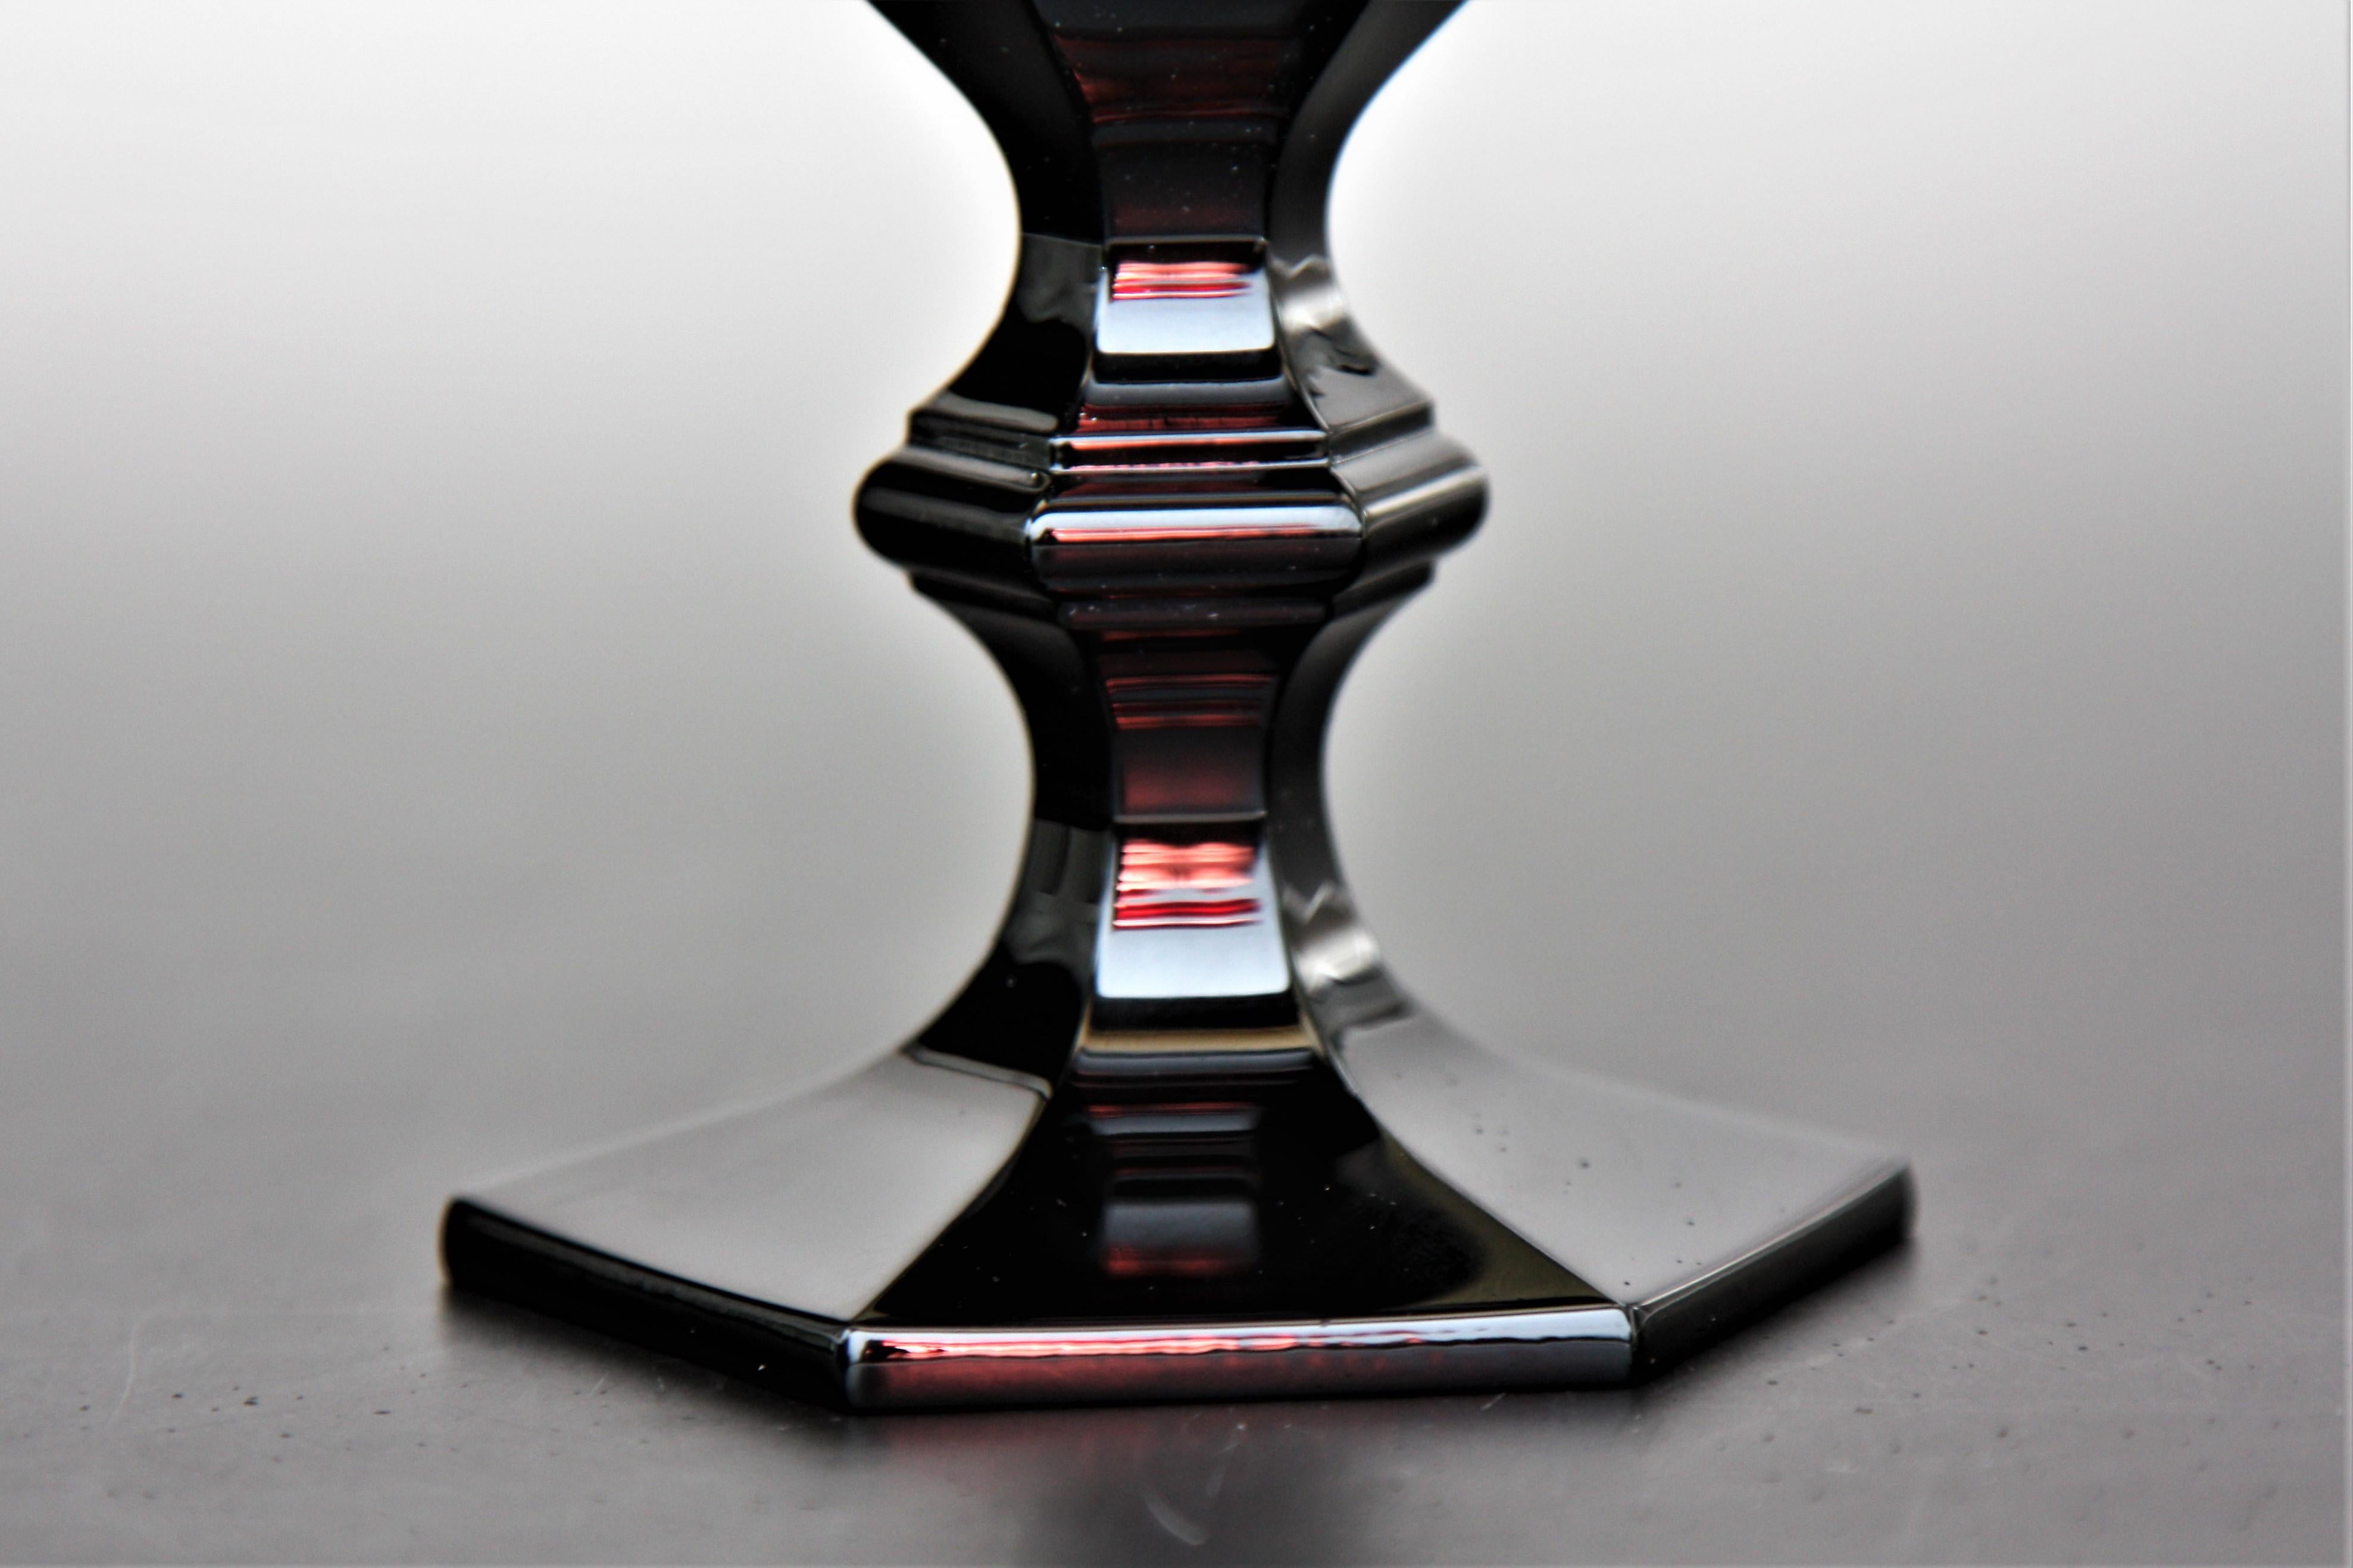 Crystal Set of 6 Wine glasses in Baccarat black crystal Harcourt Imparfait model